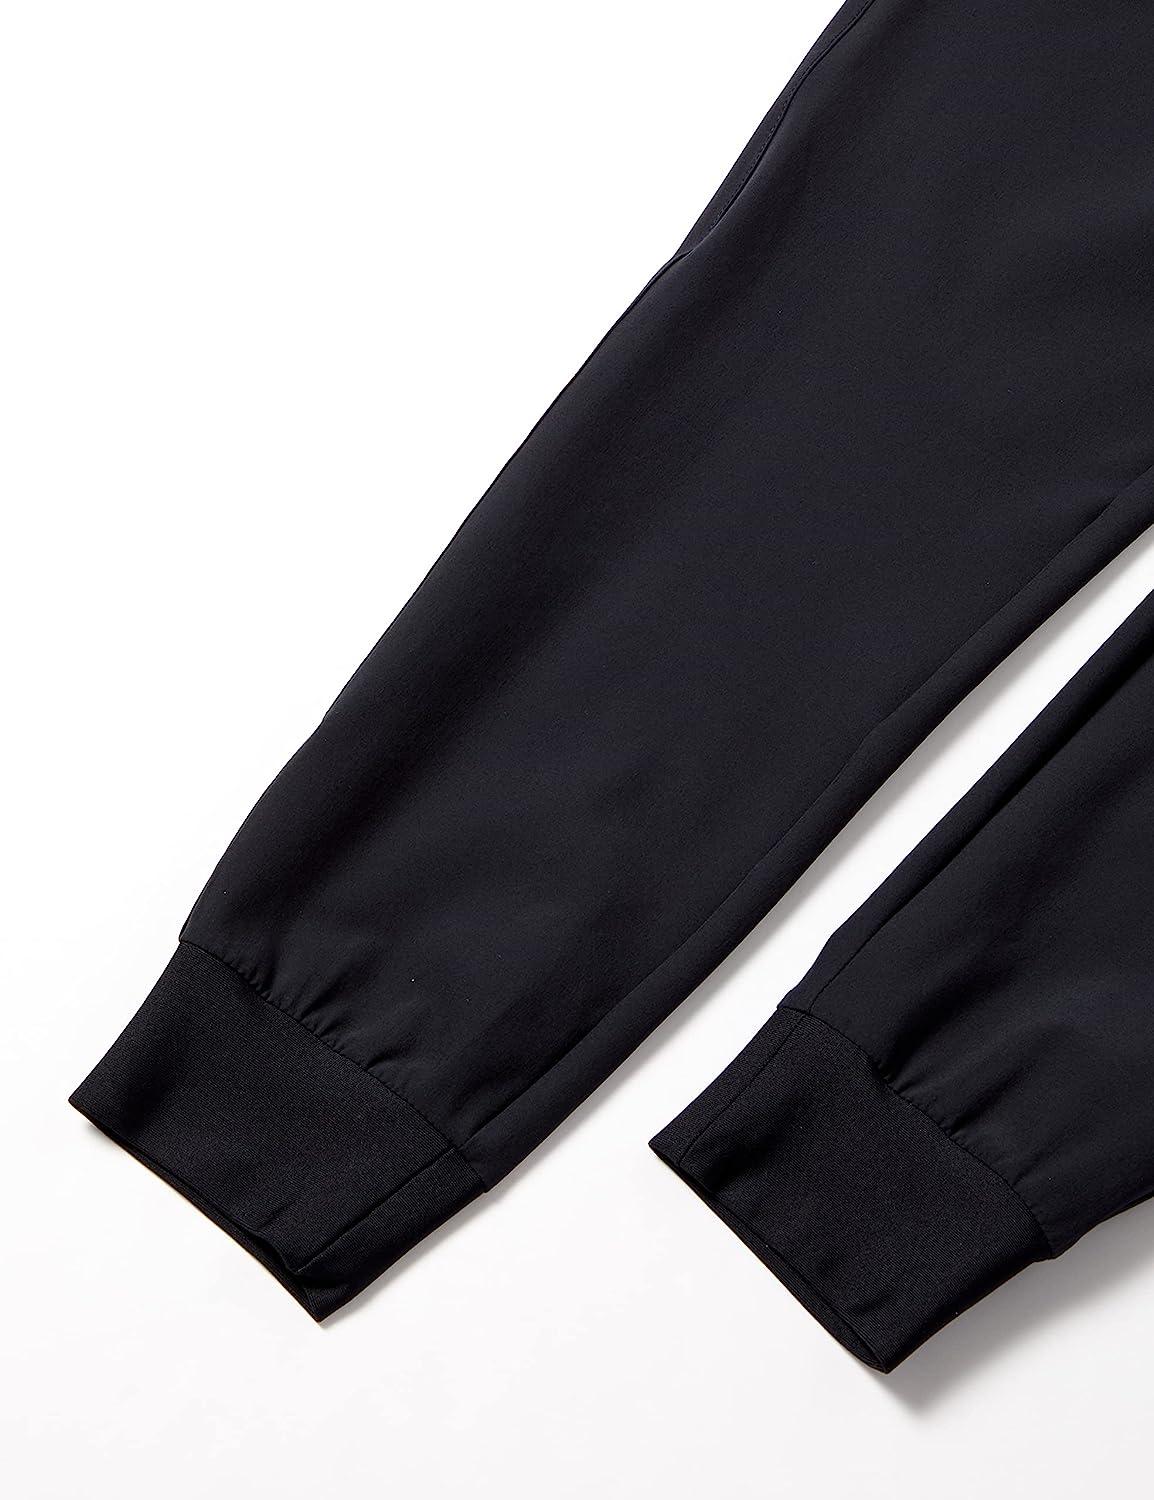 Under Armour Girls Sport Woven Pants Black (001)/Black Large